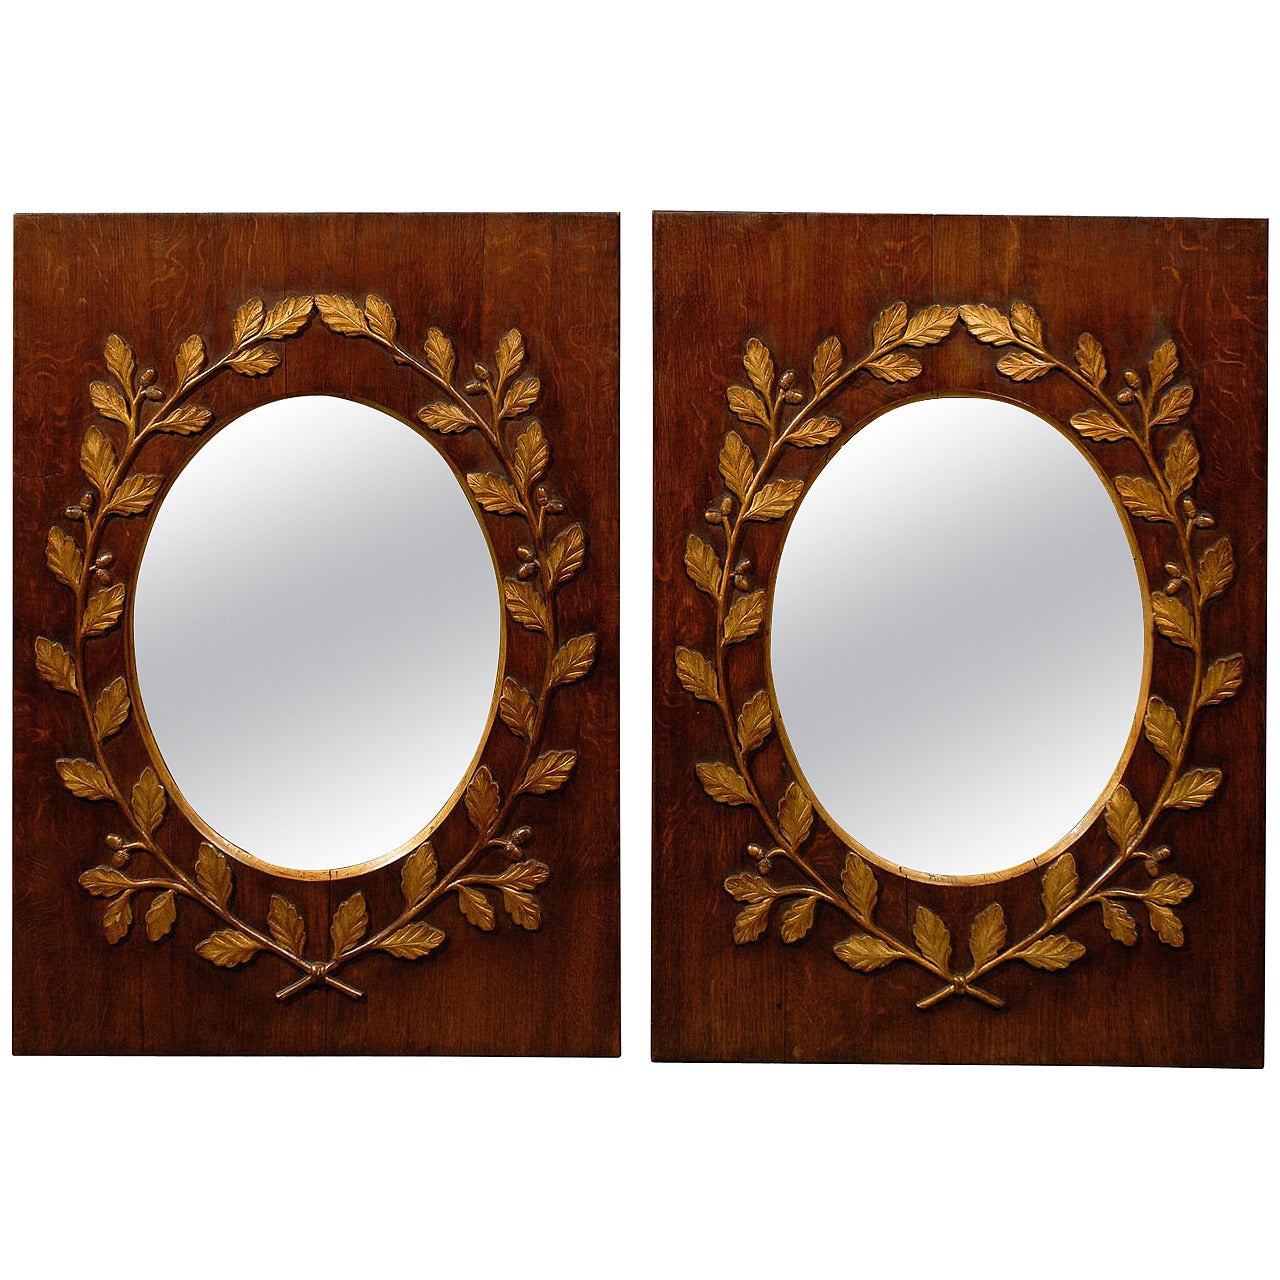 2 English Mirrors